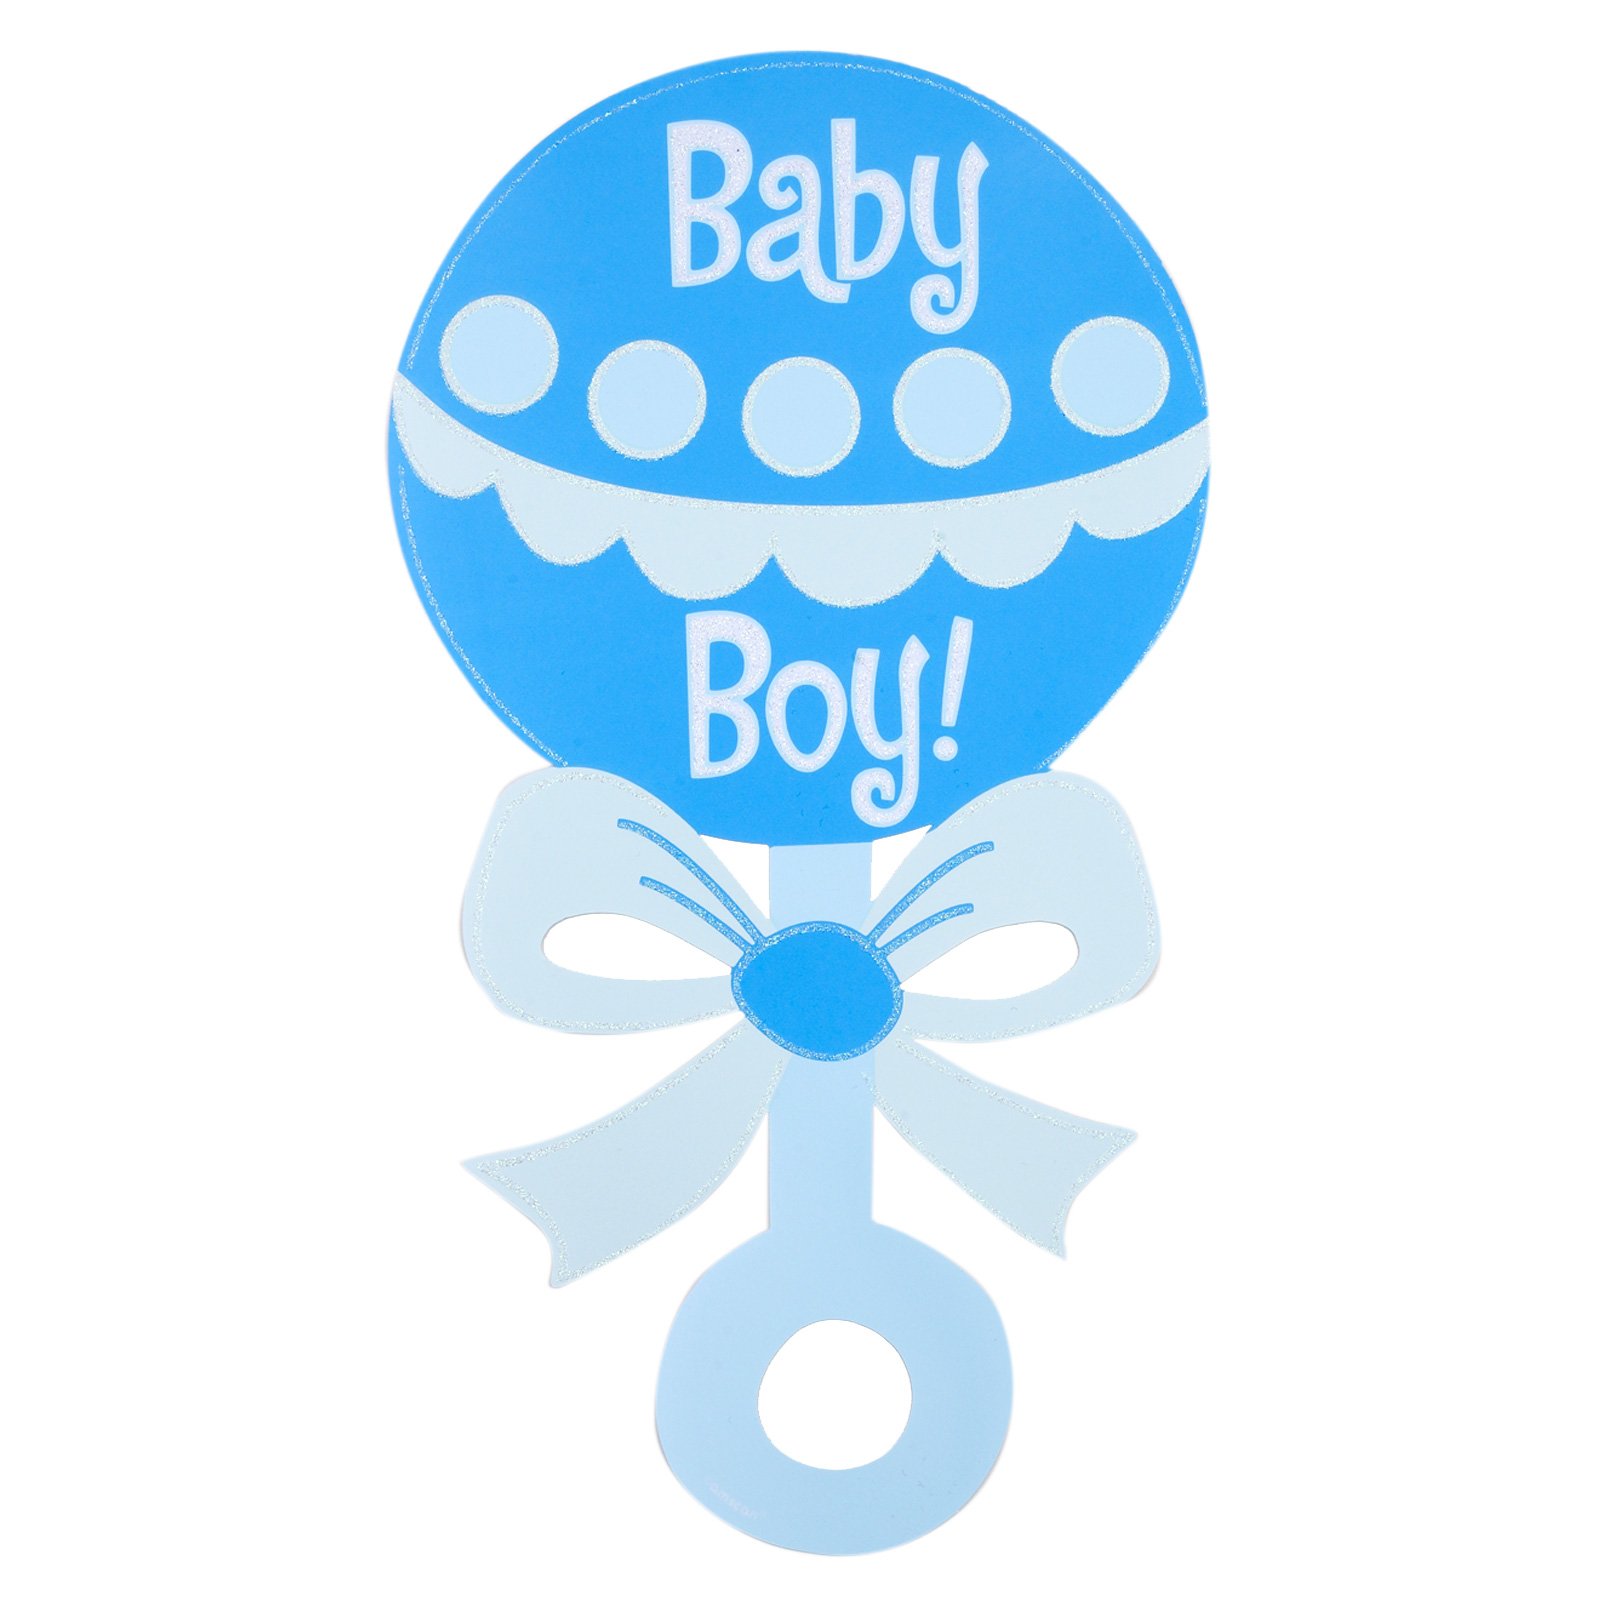 Baby Shower Clipart Boy & Baby Shower Boy Clip Art Images.